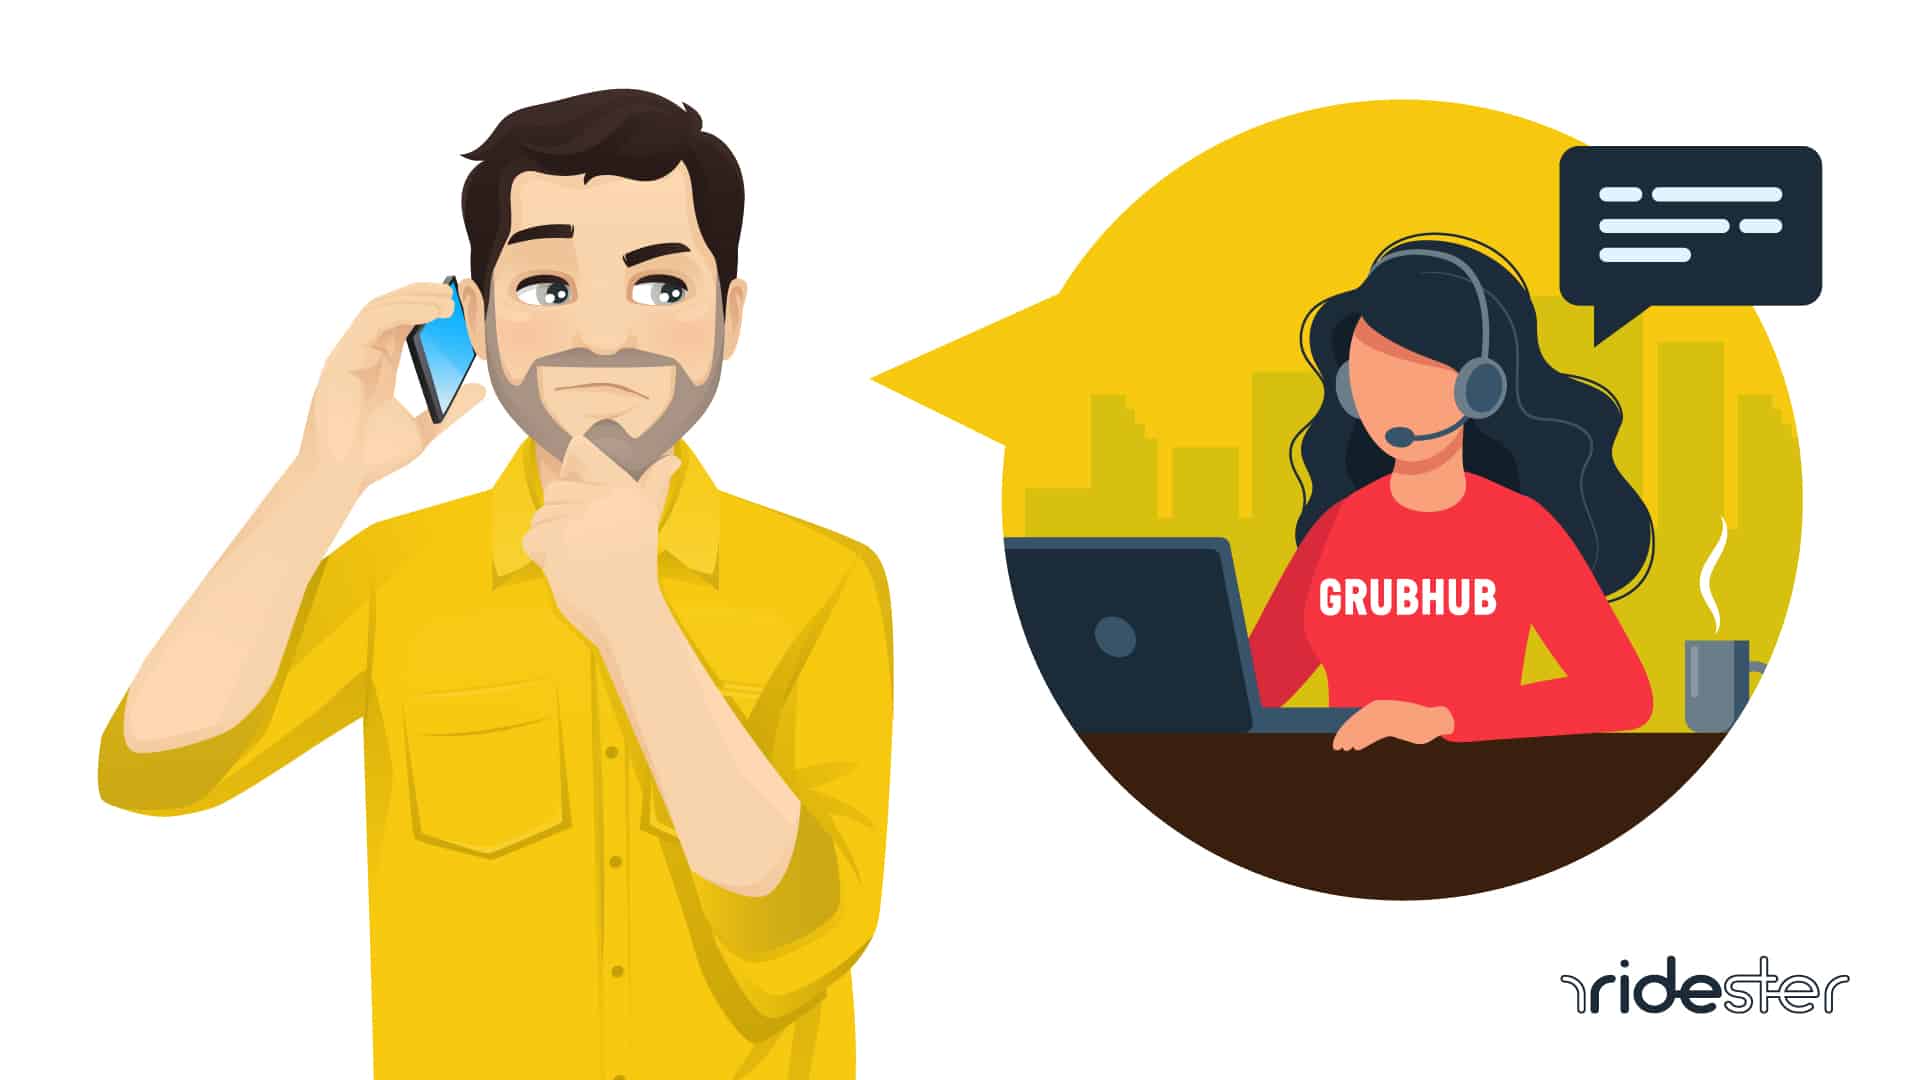 image showing man on the phone with Grubhub customer service representative